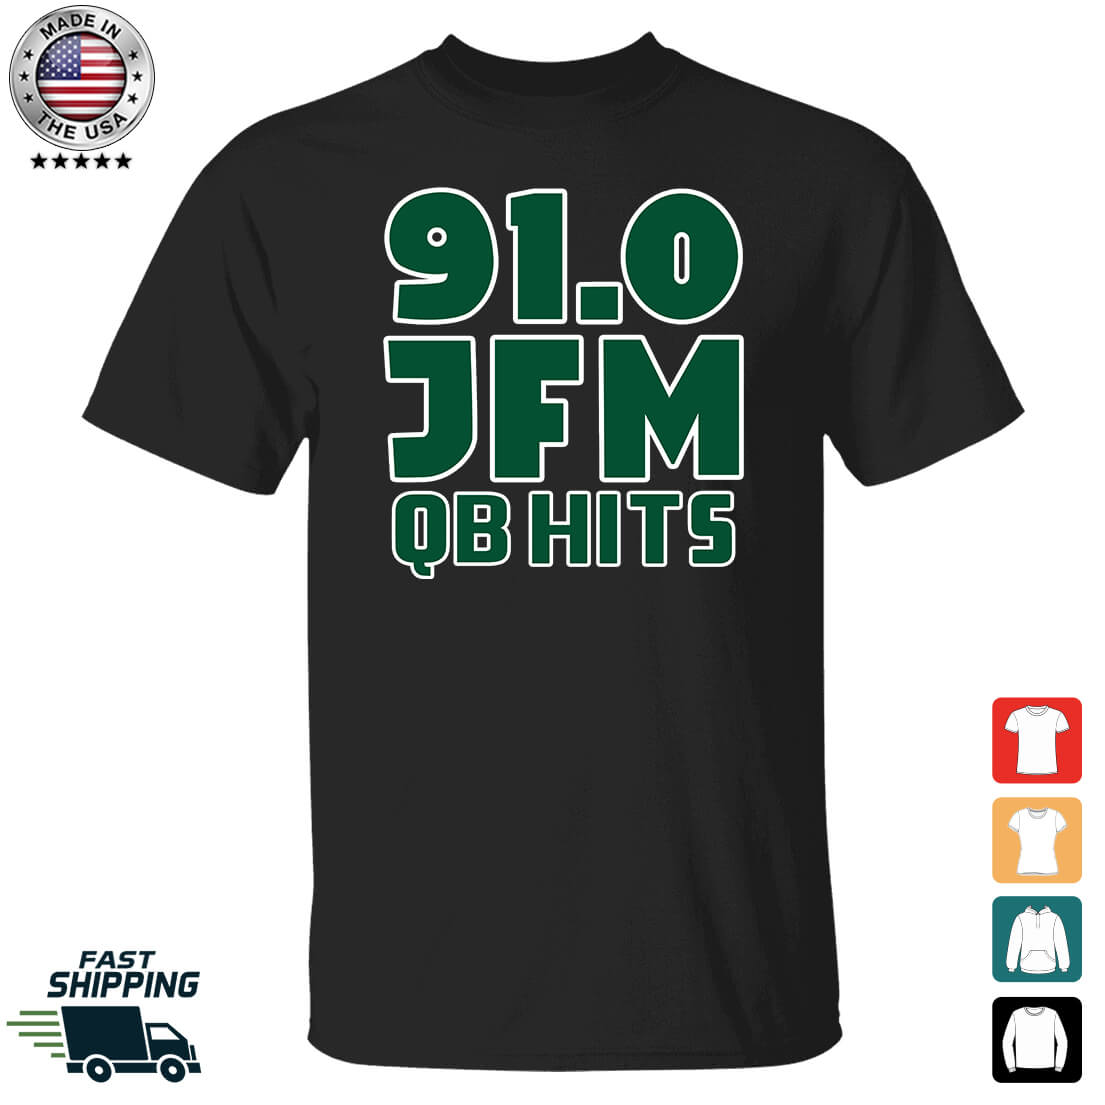 91.0 JFM QB Hist Shirt